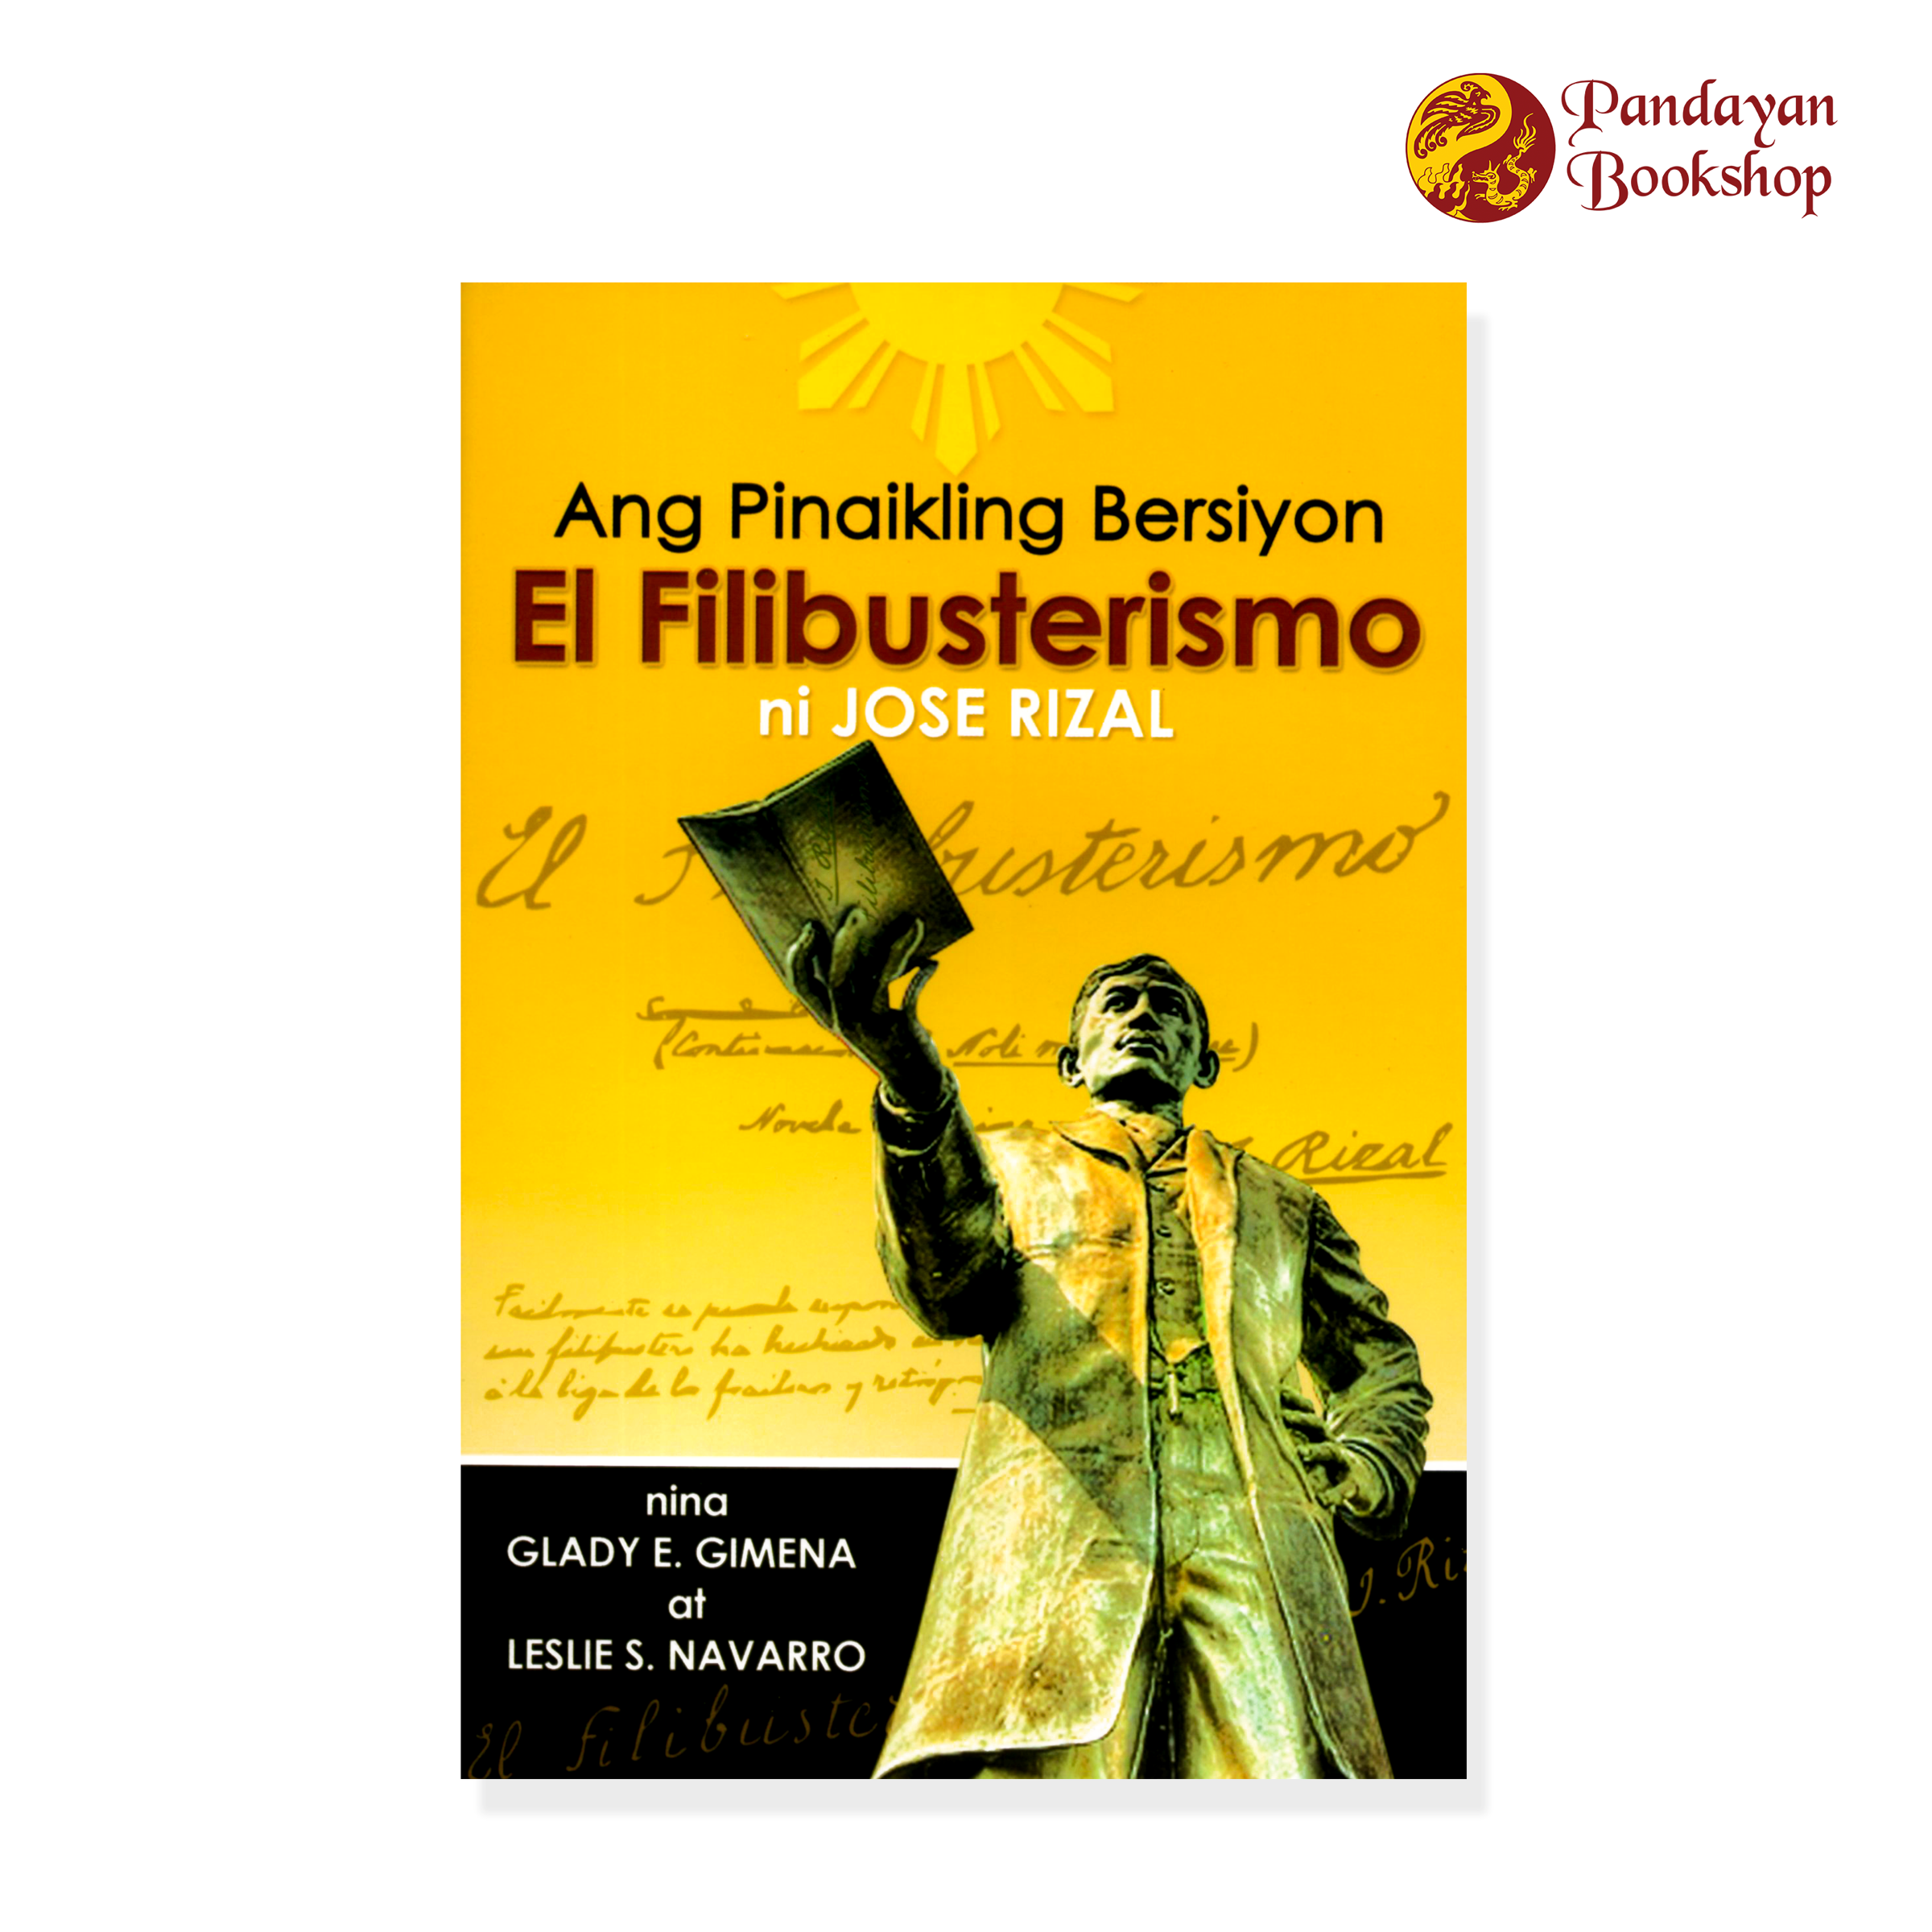 El Filibusterismo (Jose Rizal) Ang Pinaikling Bers